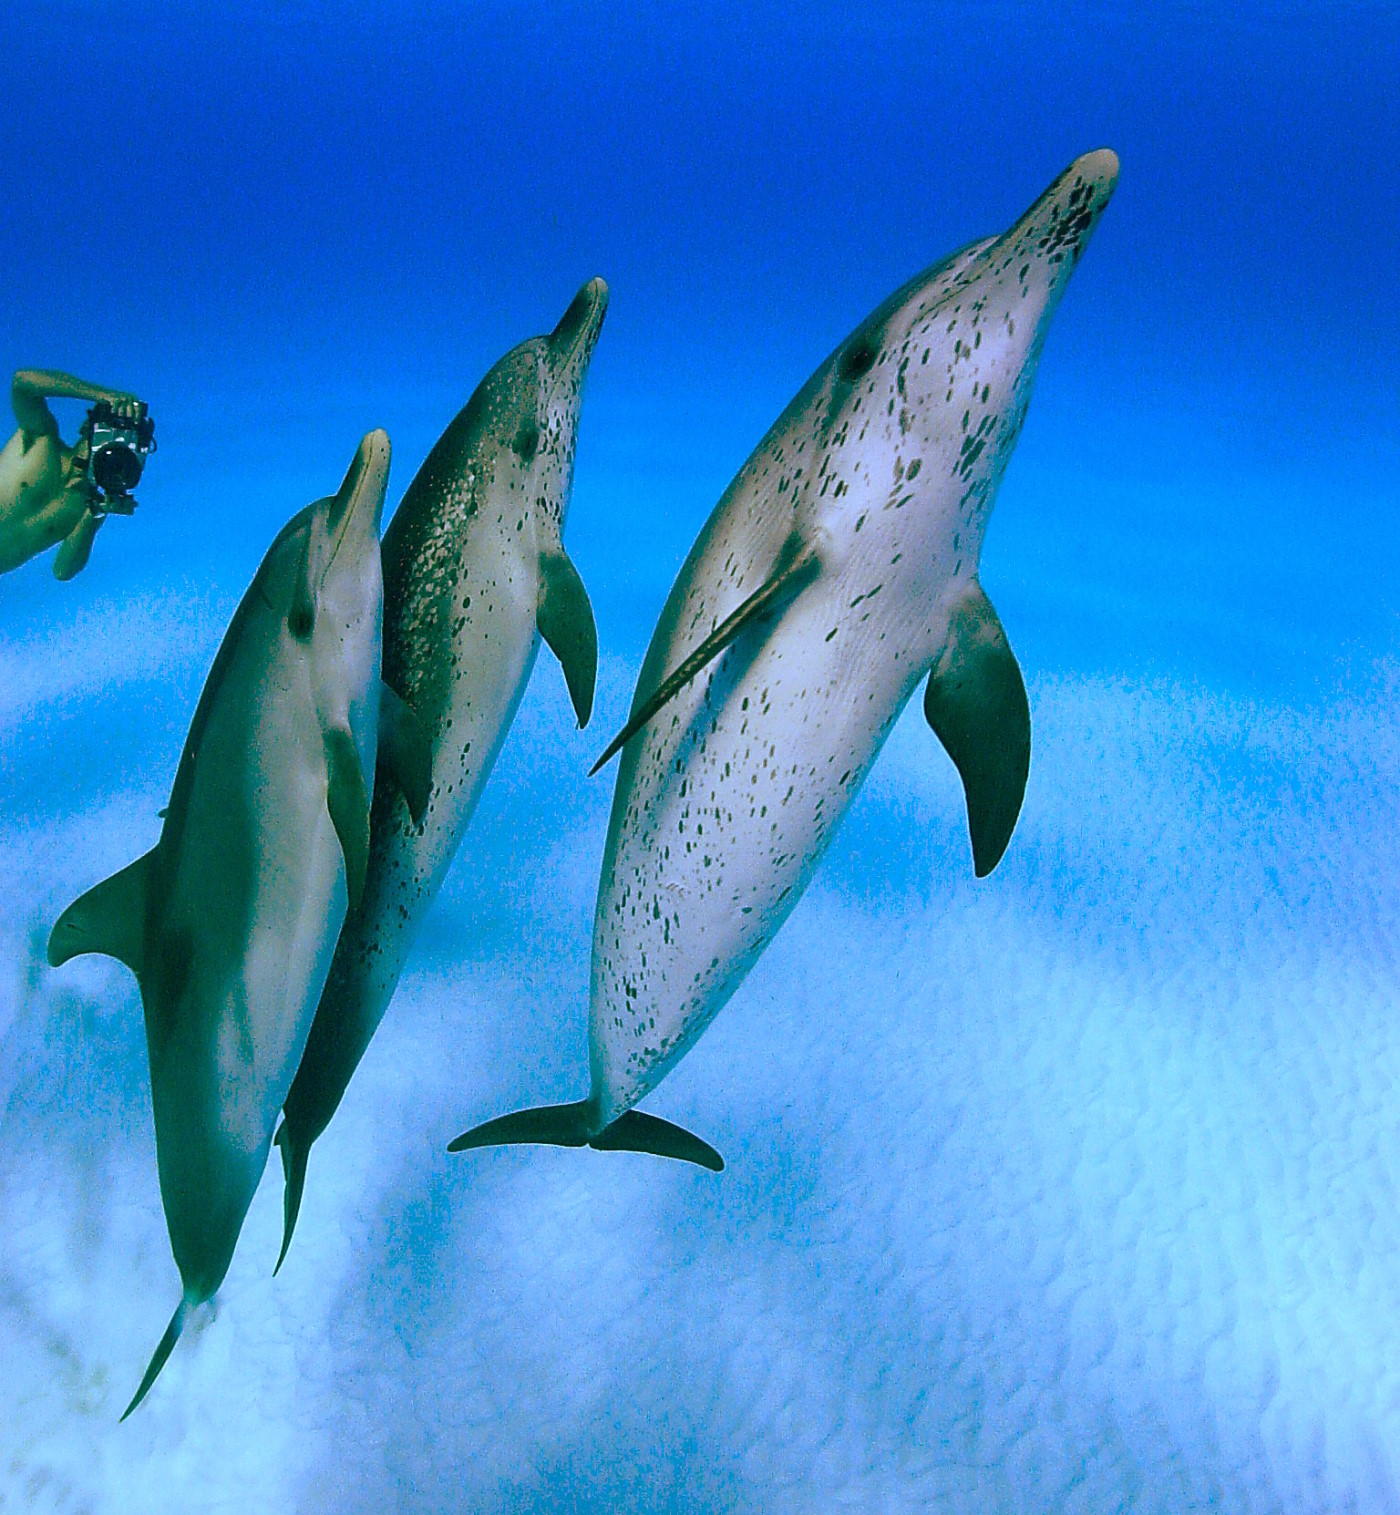 swim with dolphin